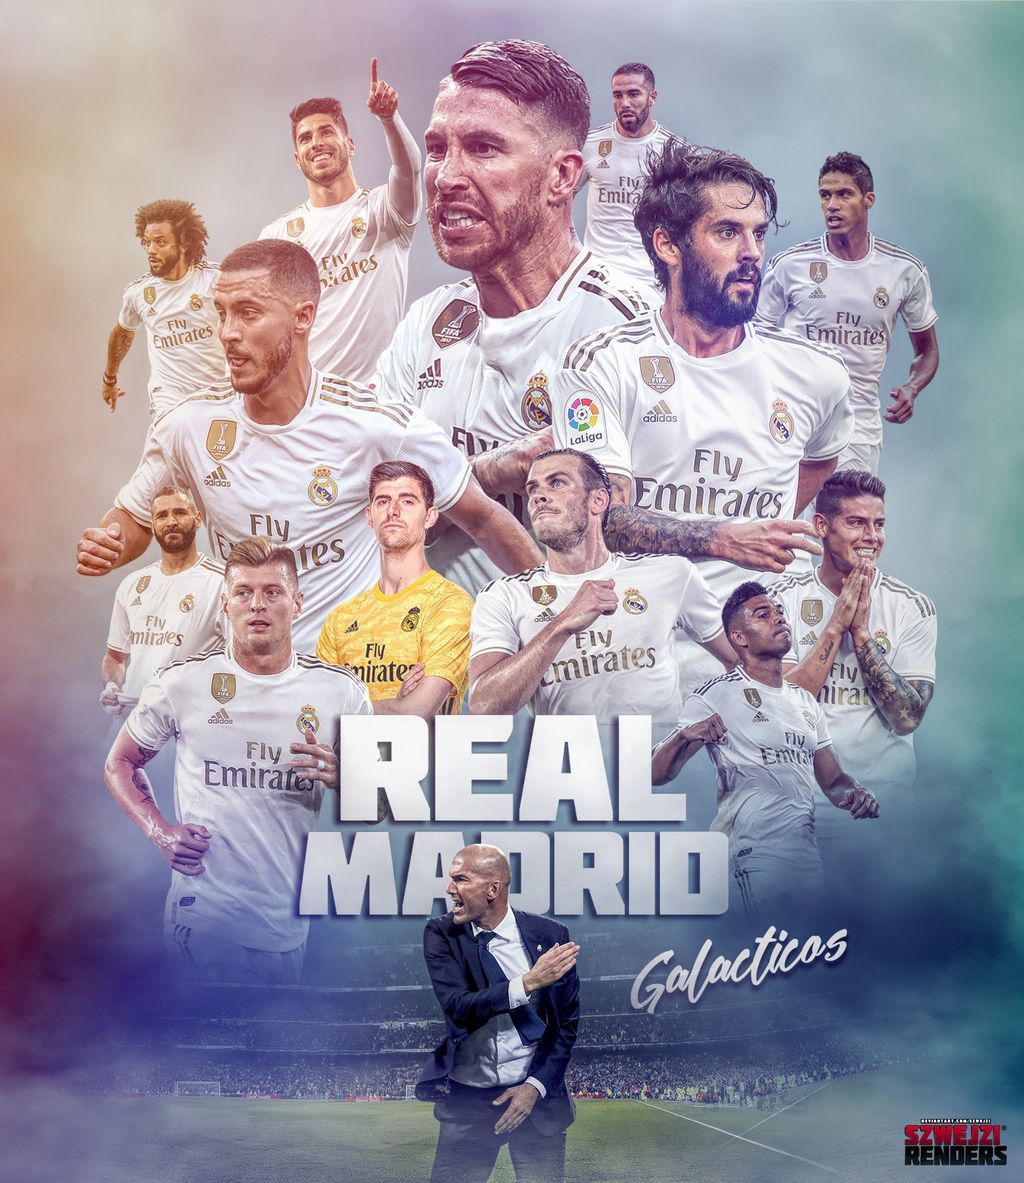 Real Madrid La Liga Champions 2020 Wallpapers - Wallpaper Cave